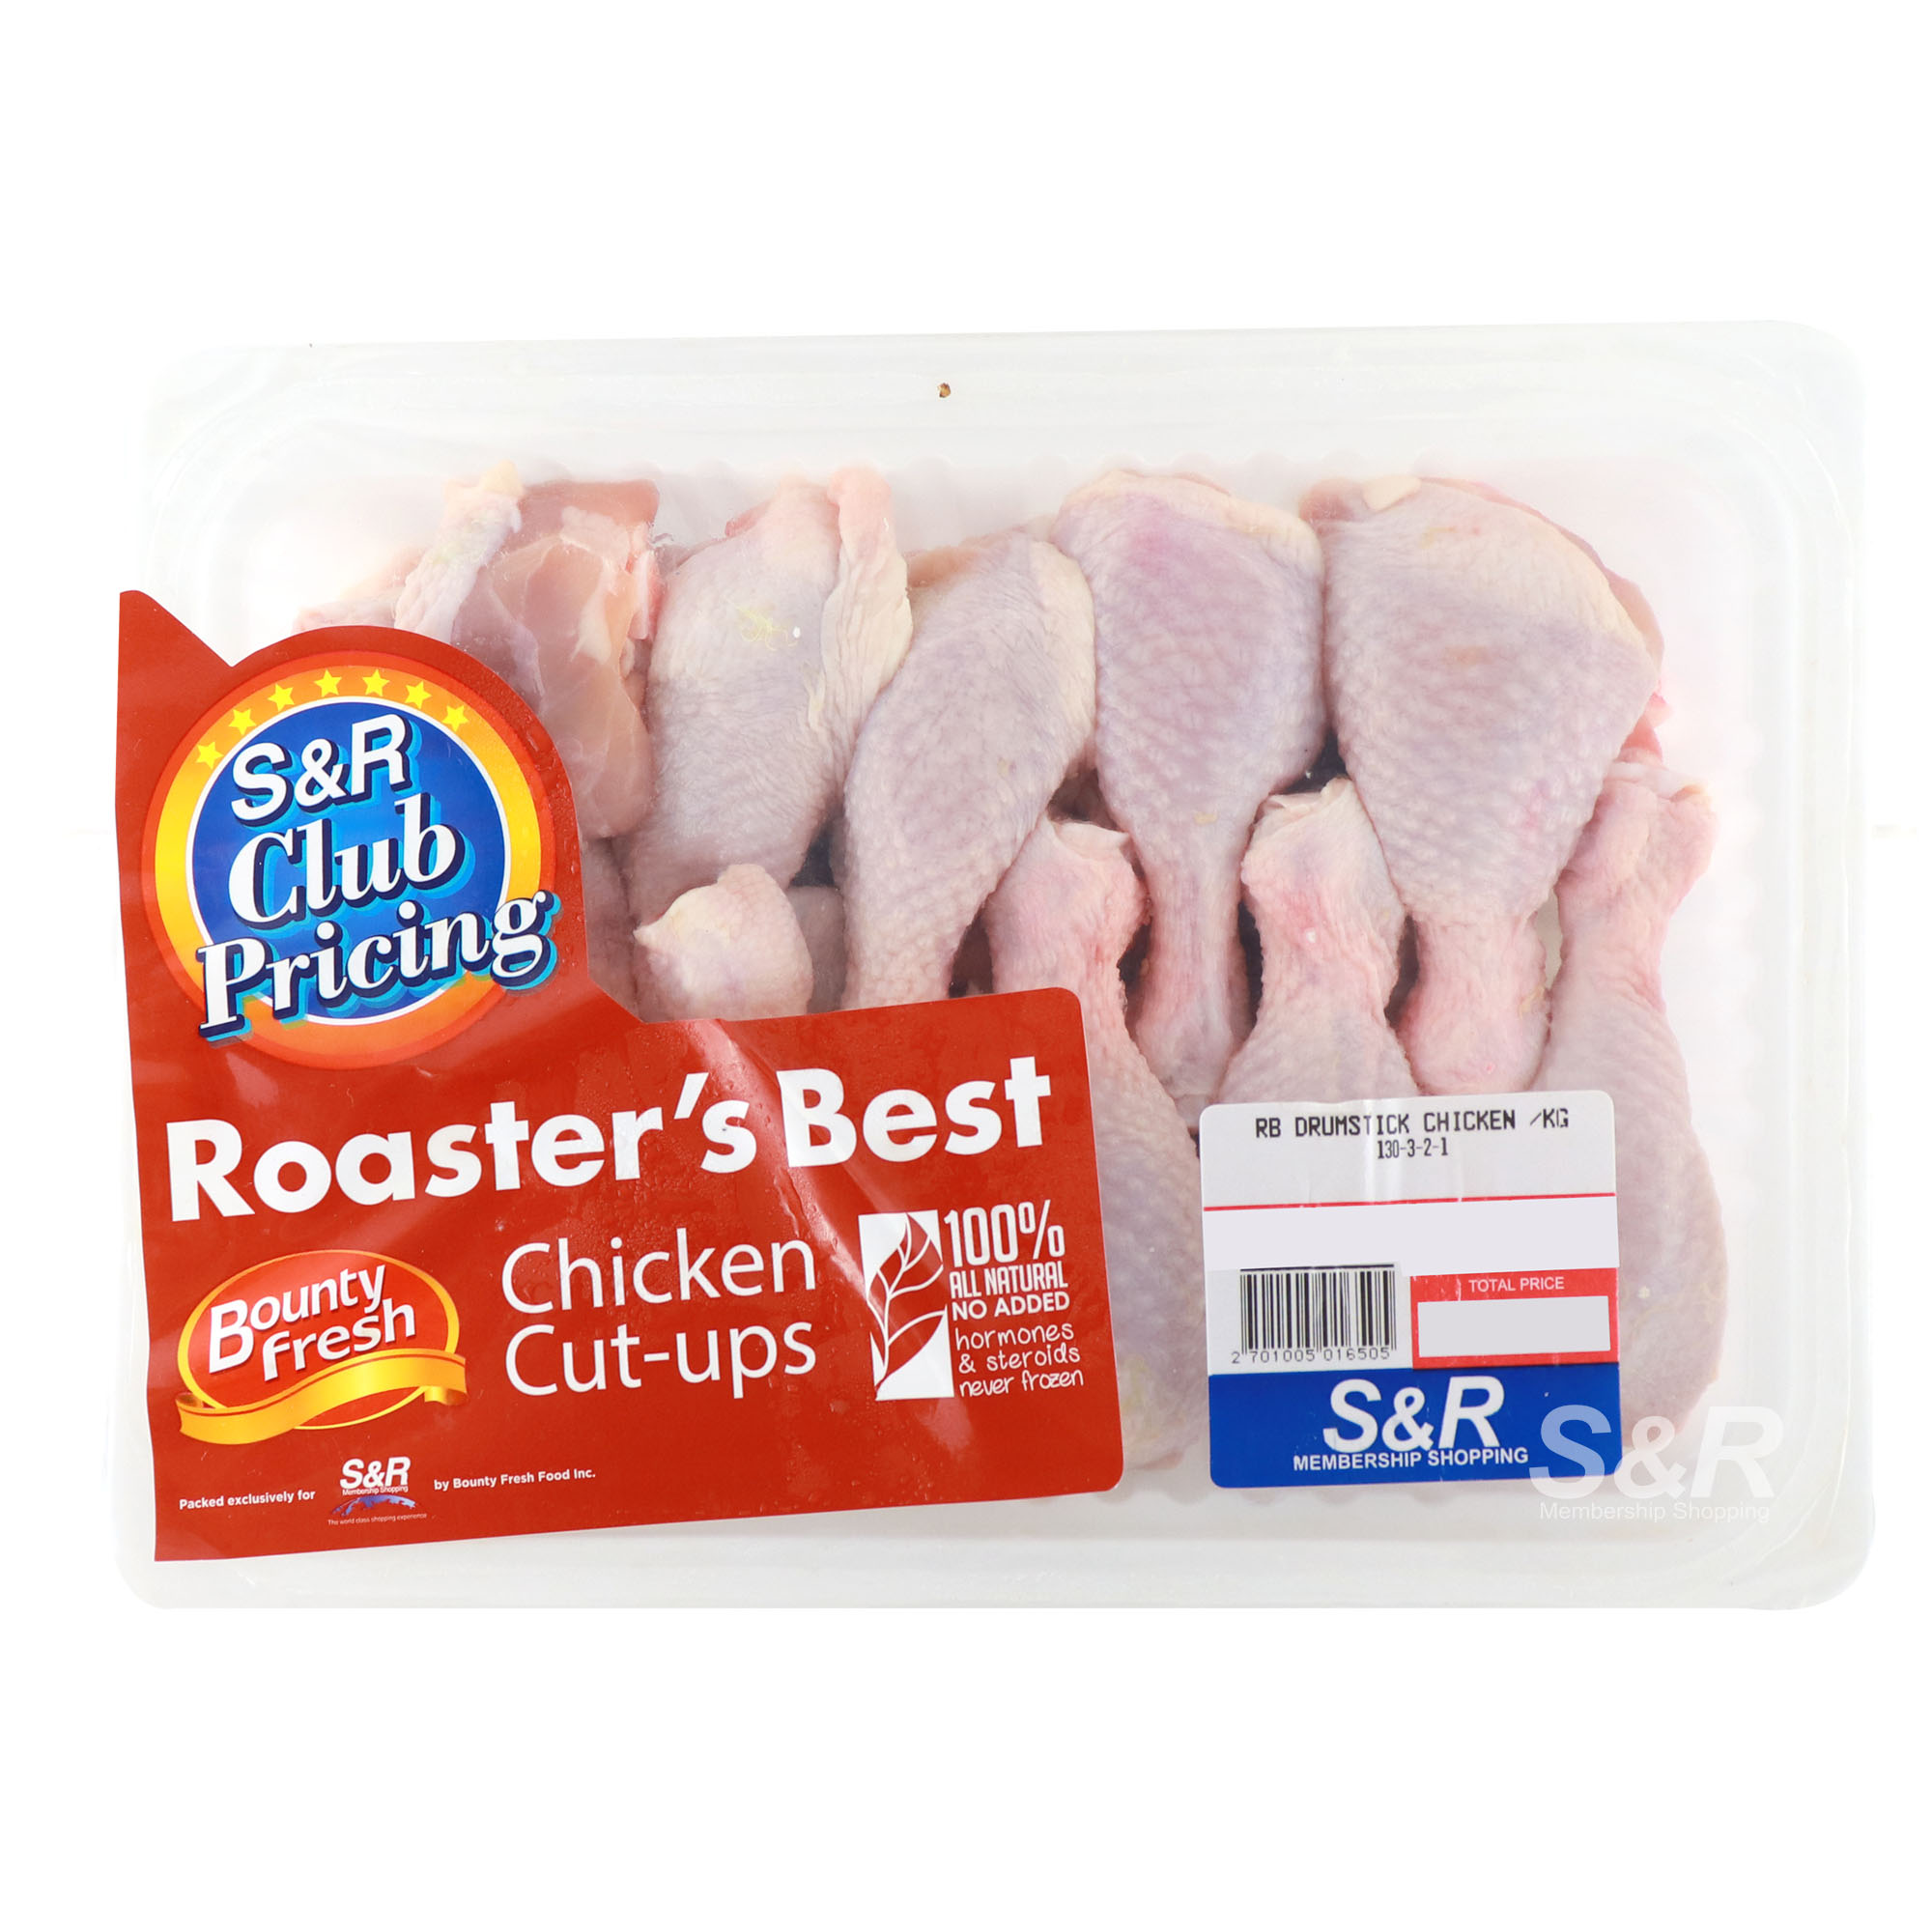 Roasters' Best Chicken Drumstick Cut-ups approx. 2.5kg